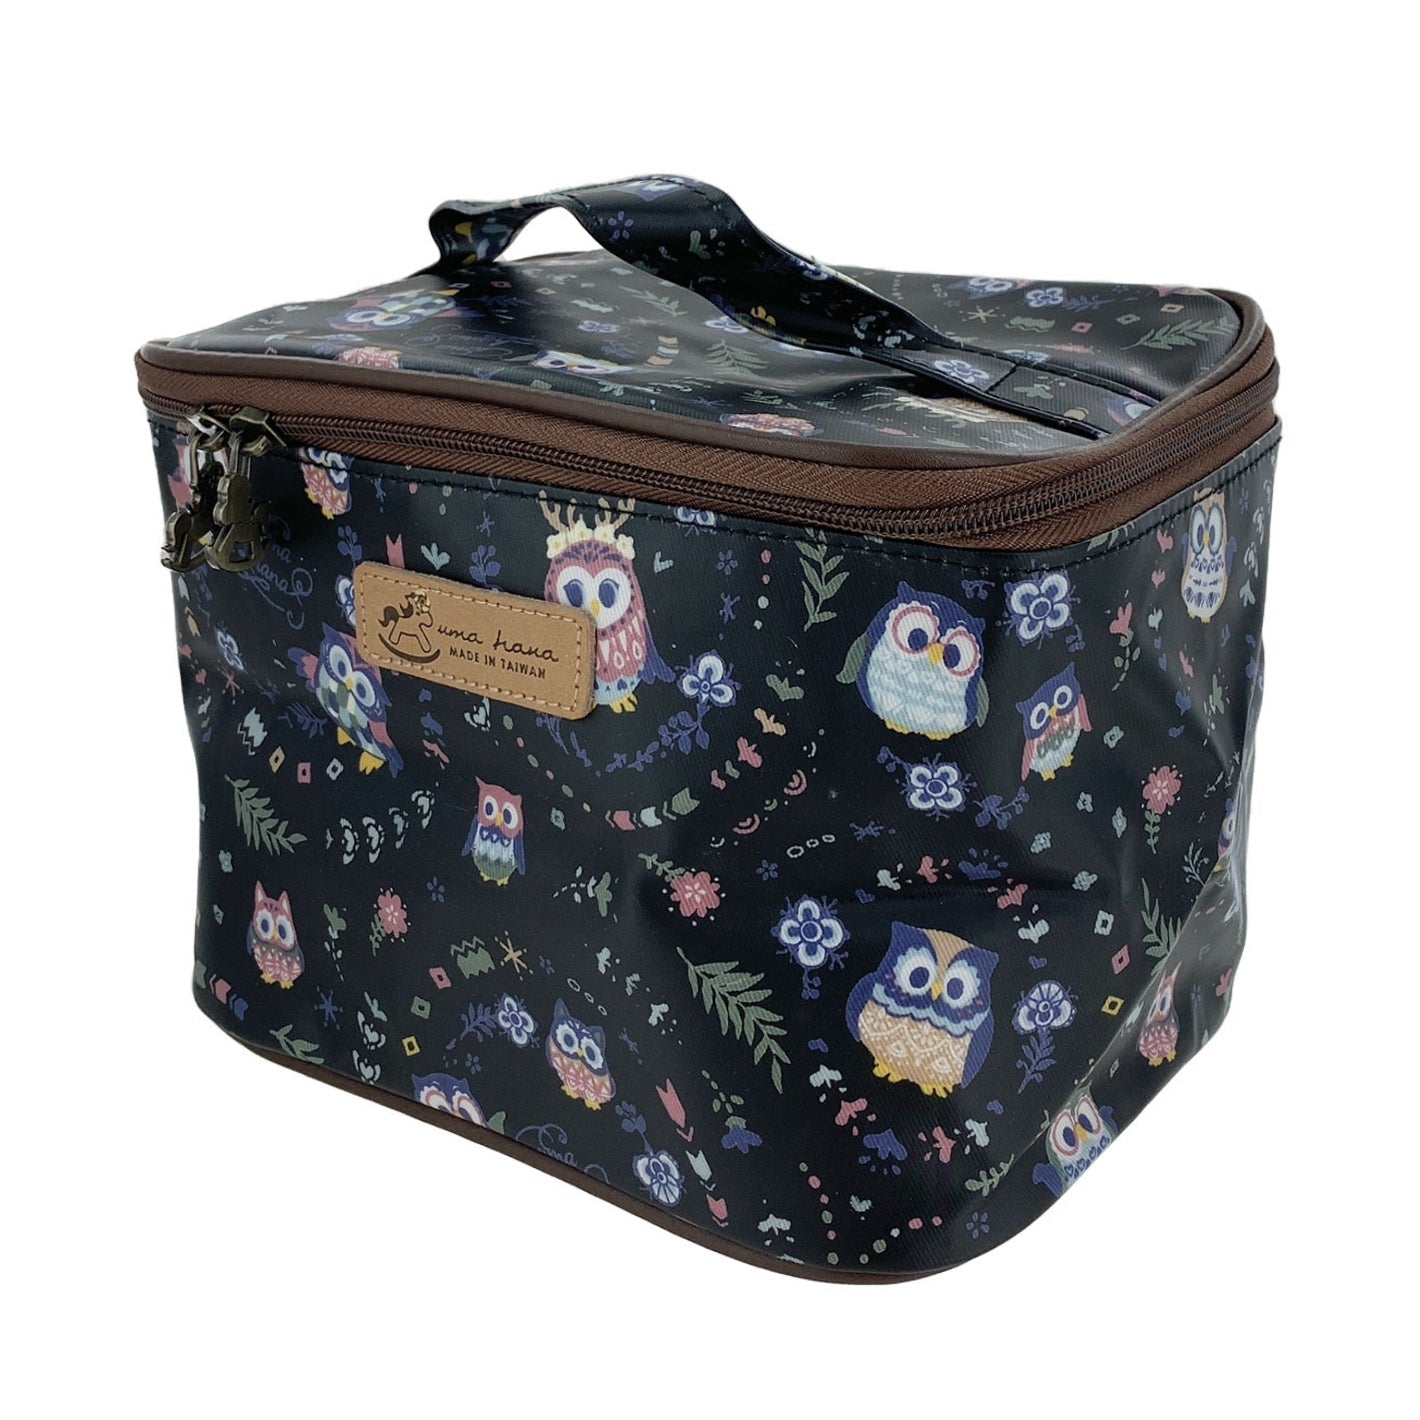 Black Owl Gardens Travel Cosmetic Bag